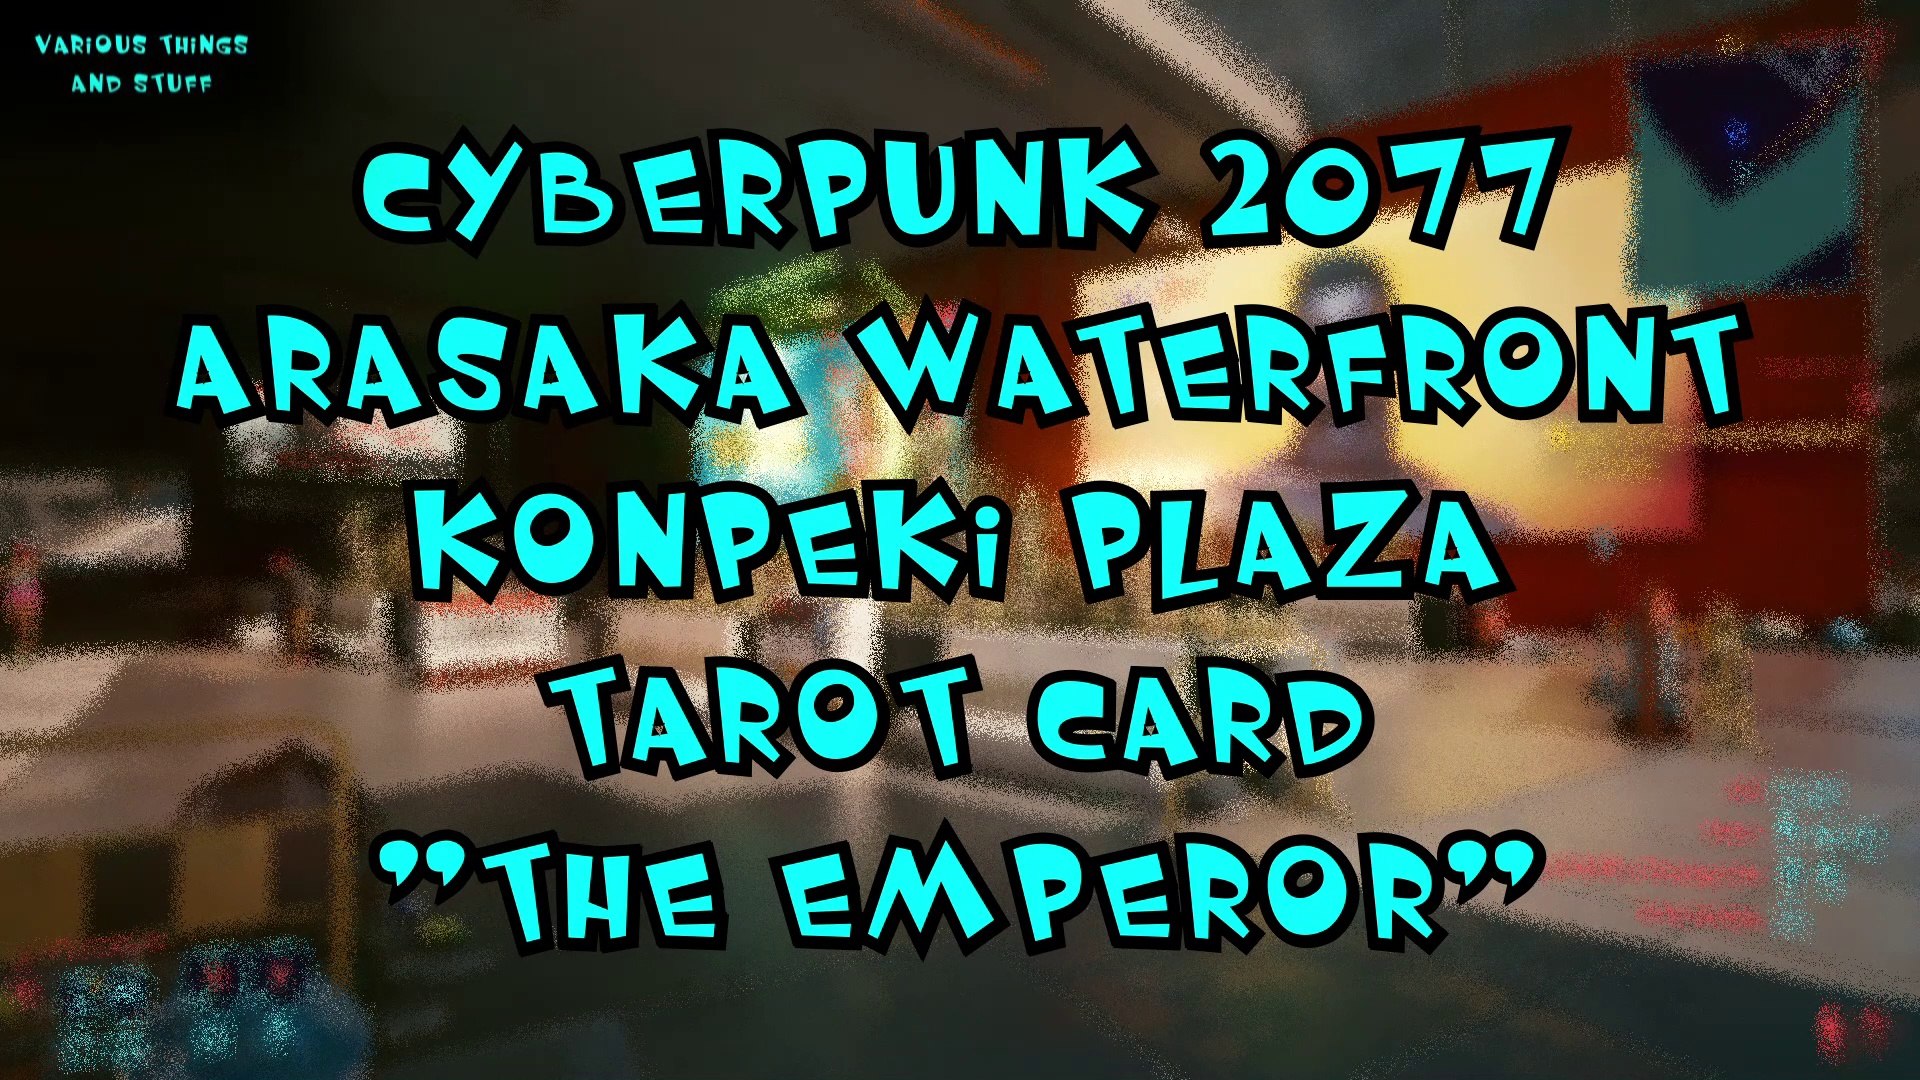 Cyberpunk 2077 Arasaka Waterfront Konpeki Plaza Tarot Card The Emperor Video Dailymotion Guide for all tarot card locations (tarot graffiti murals) in cyberpunk 2077. cyberpunk 2077 arasaka waterfront